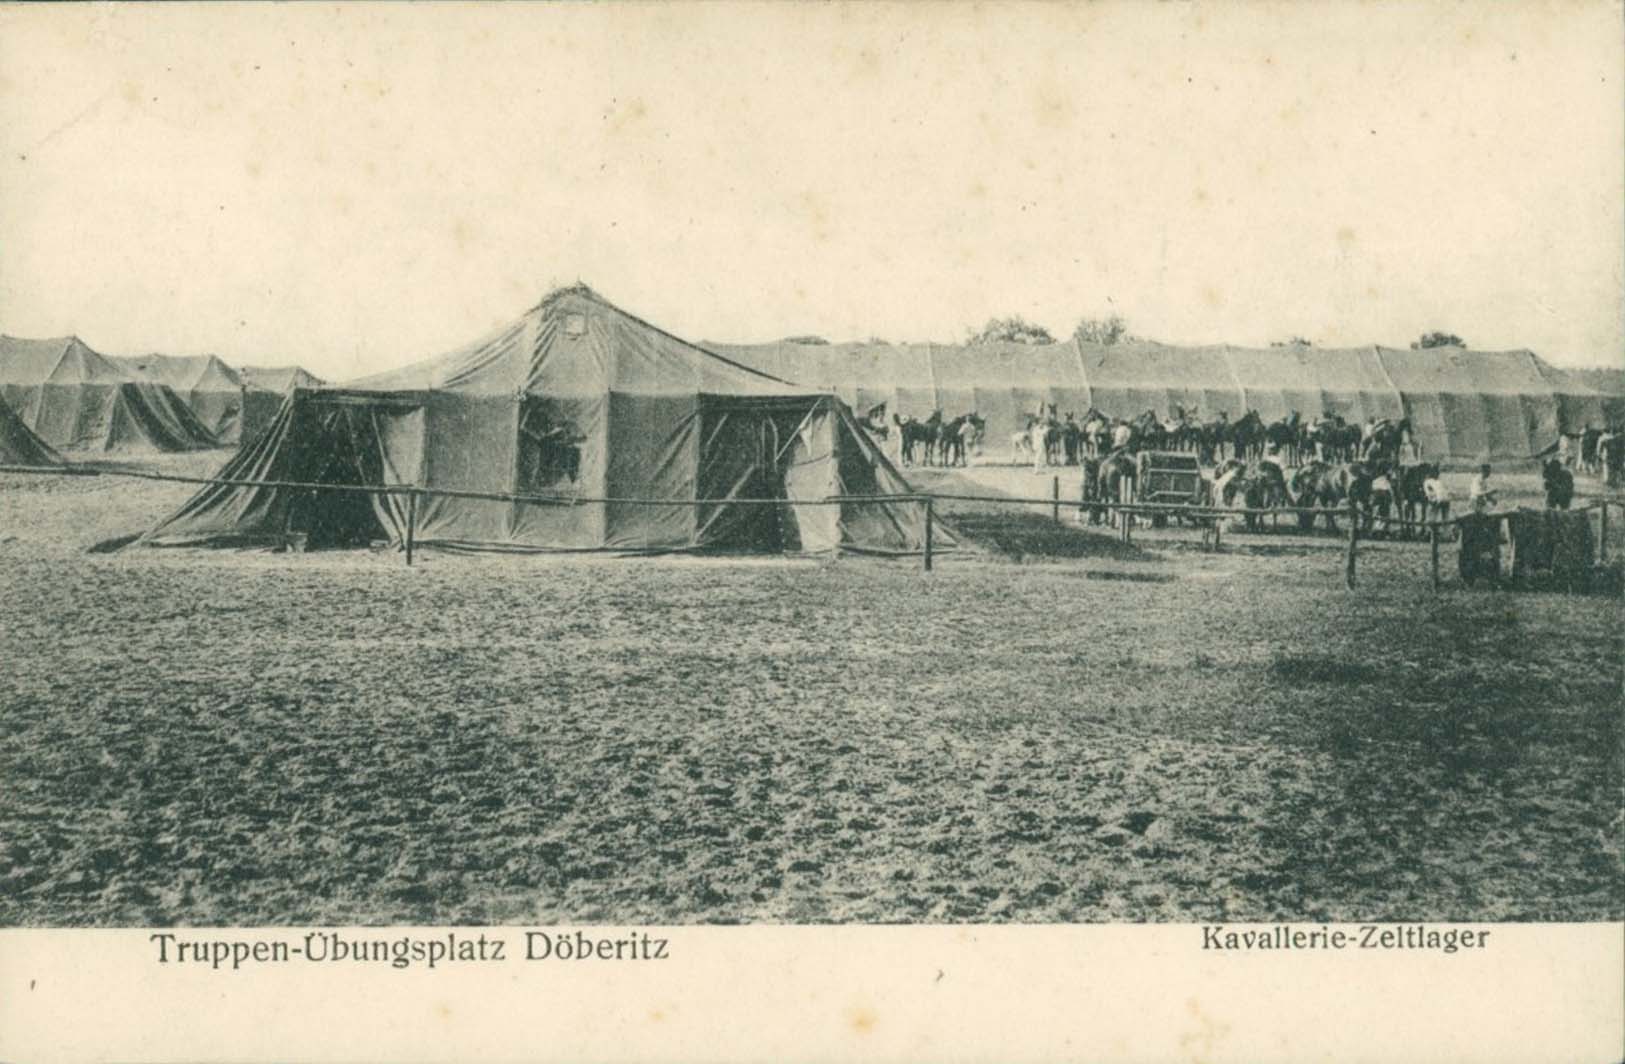 Dallgow-Döberitz. Truppenübungsplatz, Kavallerie, Zeltlager, 1913